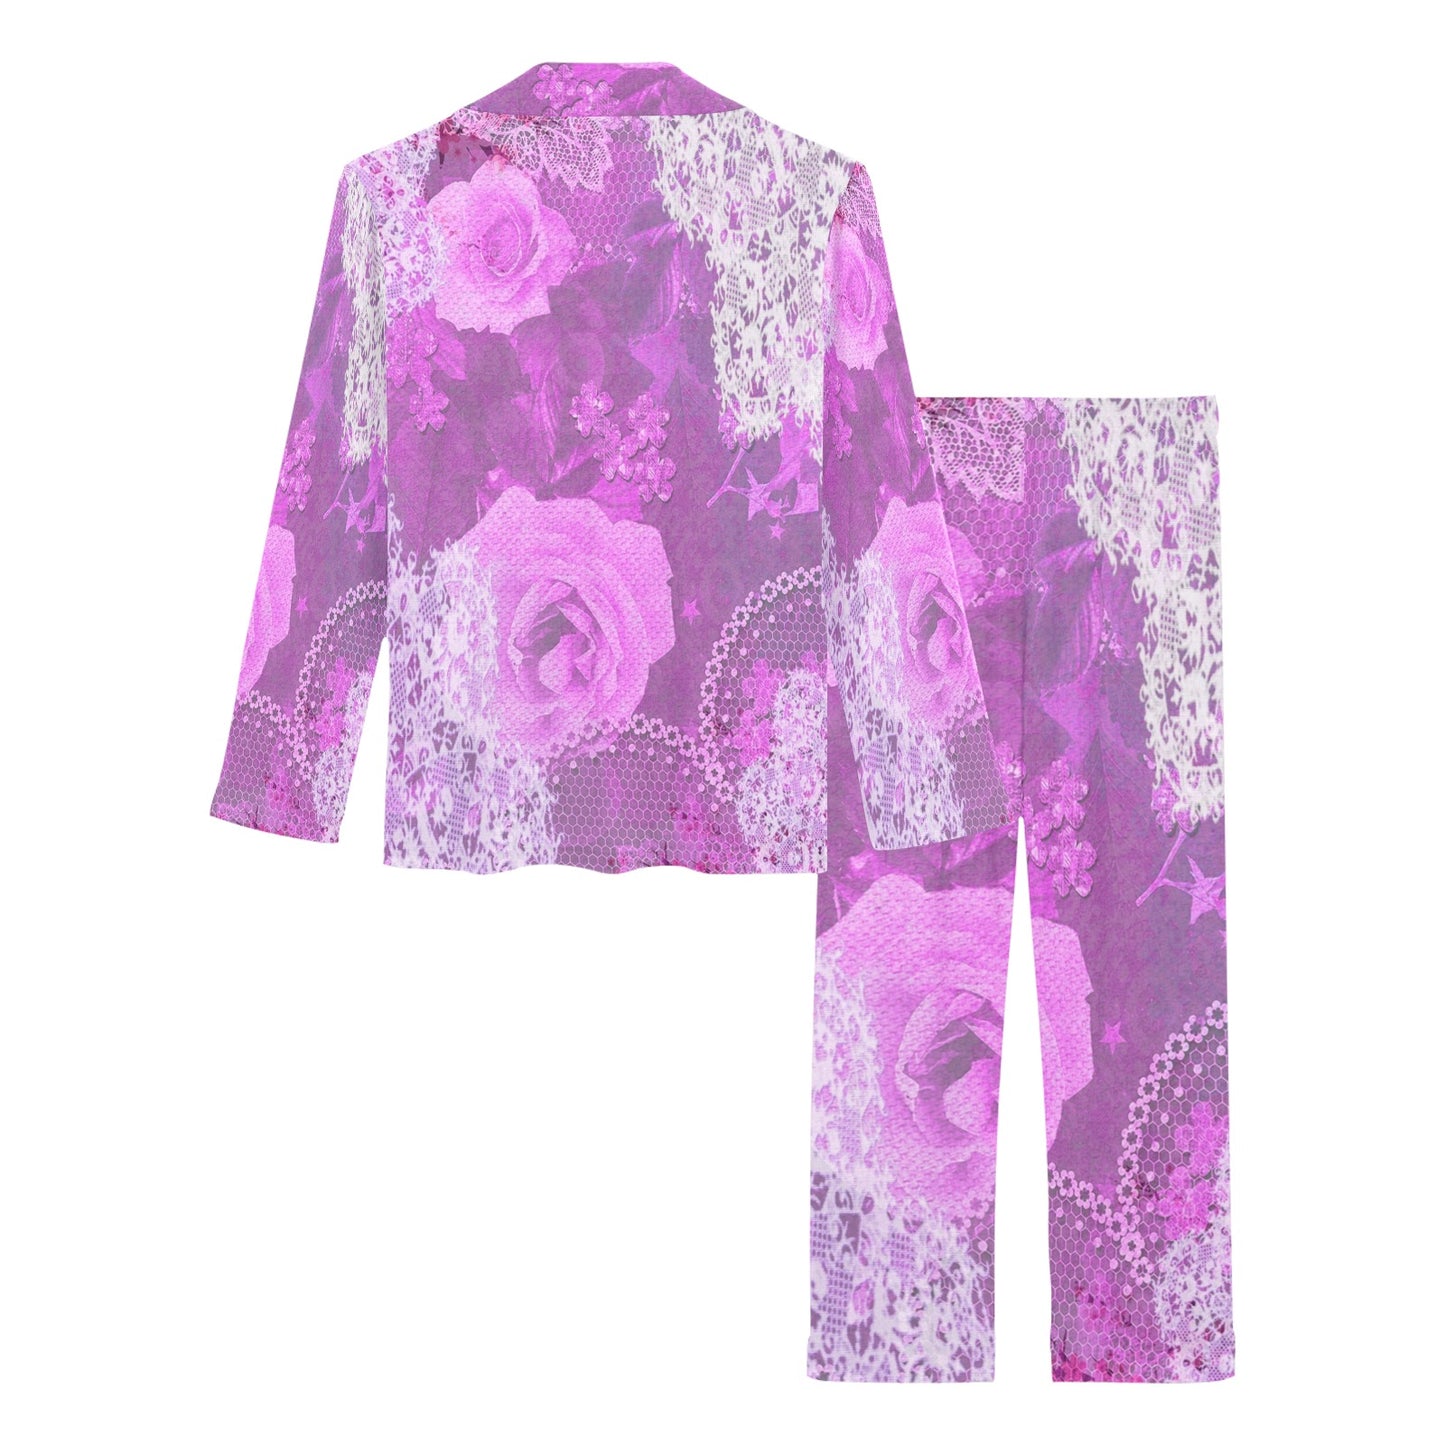 Victorian printed lace pajama set, design 03 Women's Long Pajama Set (Sets 02)